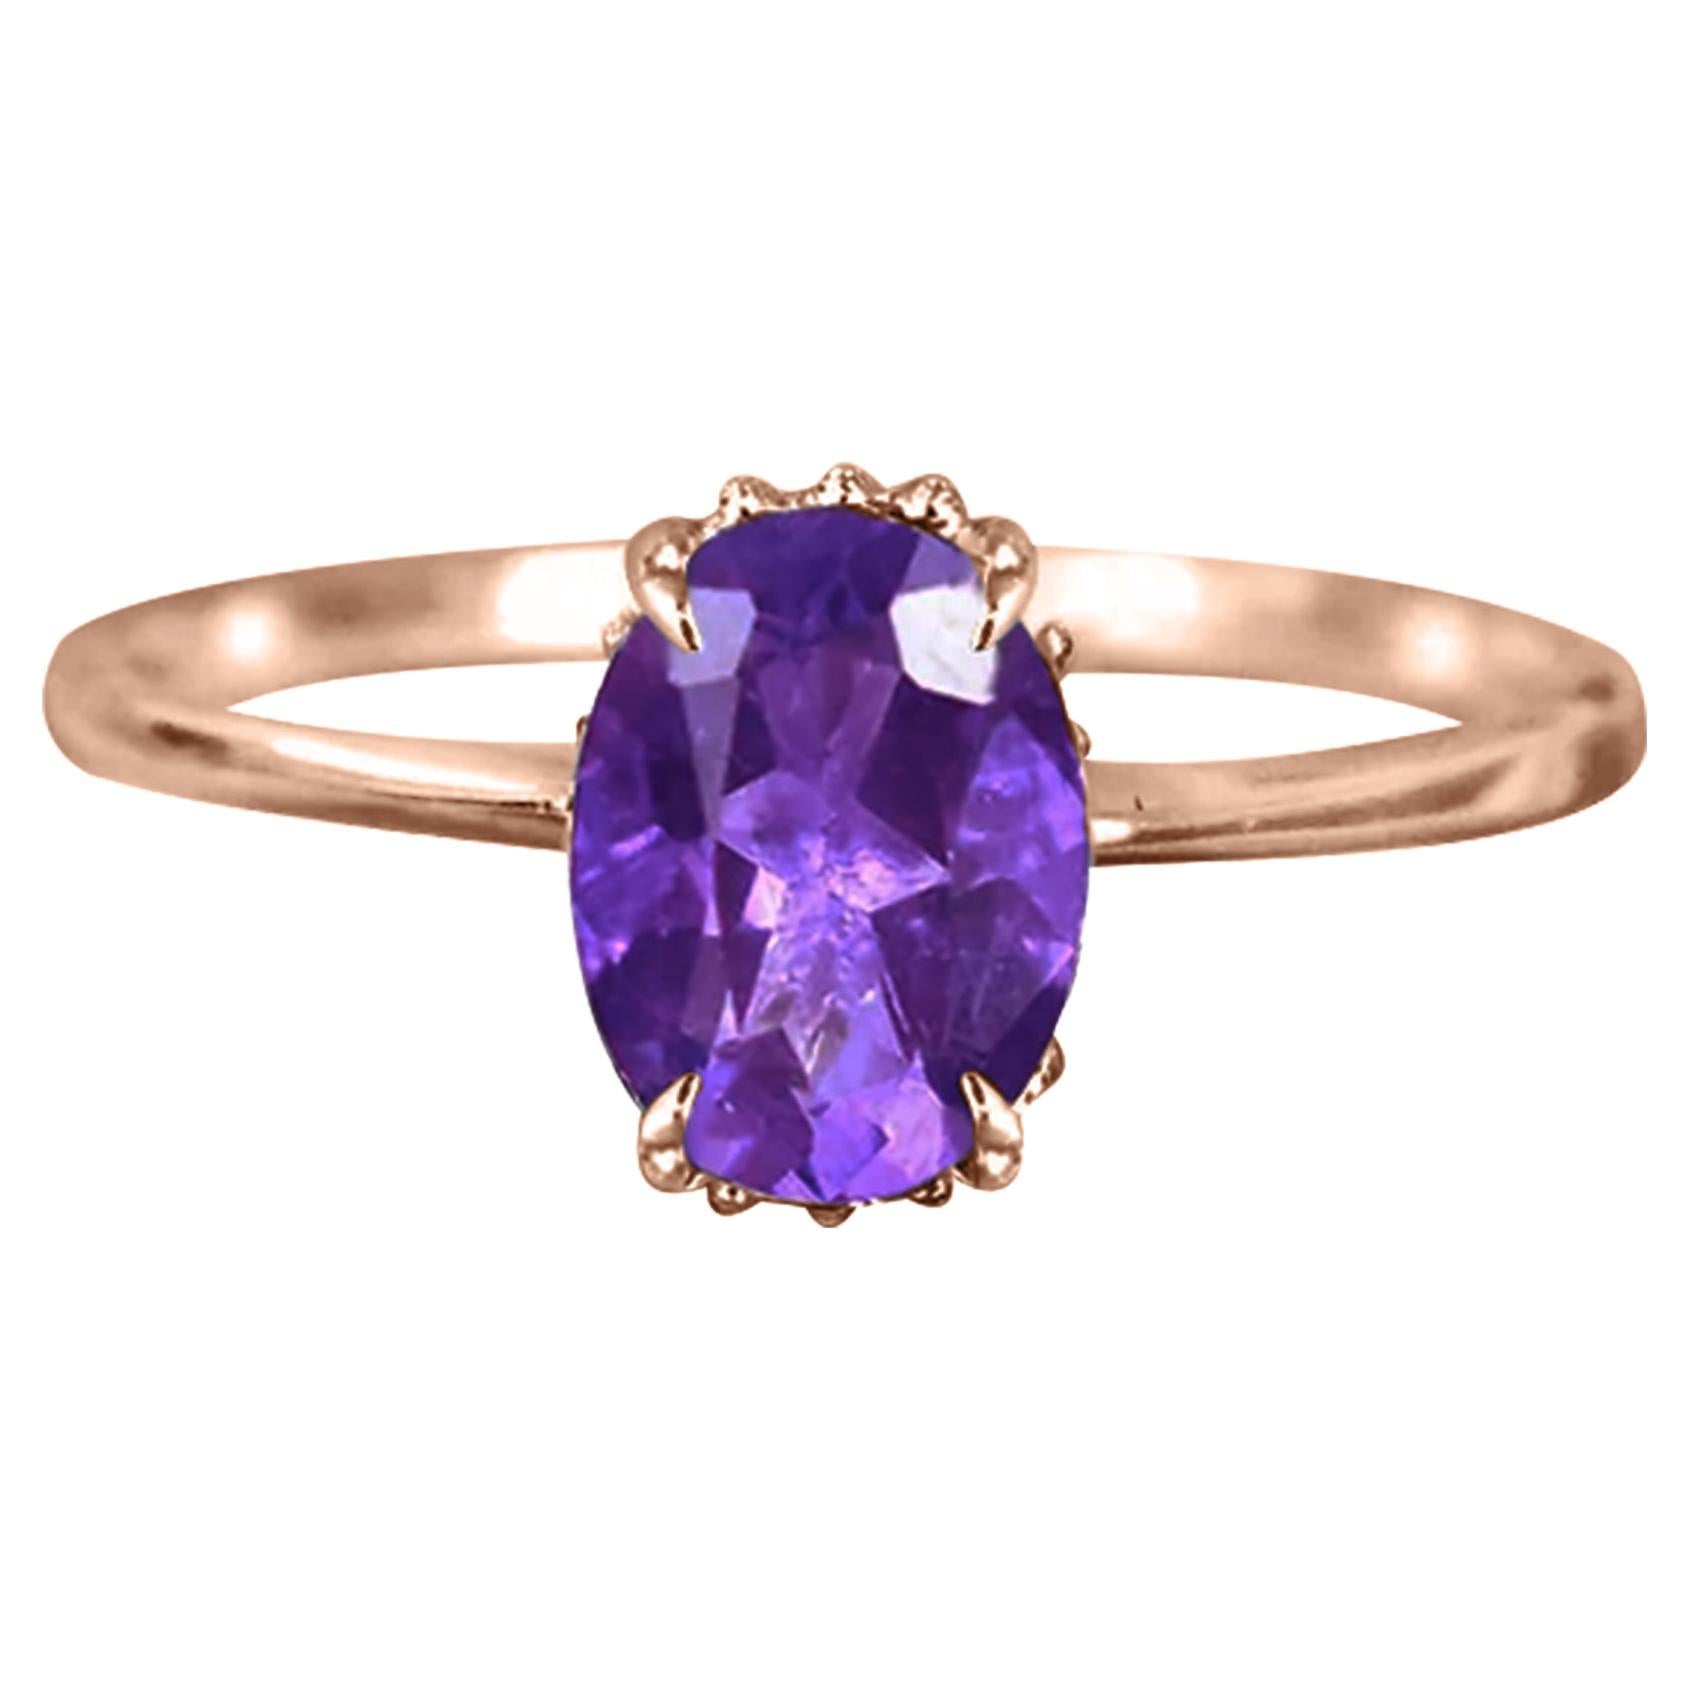 For Sale:  10k Gold Oval Gemstone 8x6 mm Oval Cut Gemstone Ring Gemstone Engagement Ring